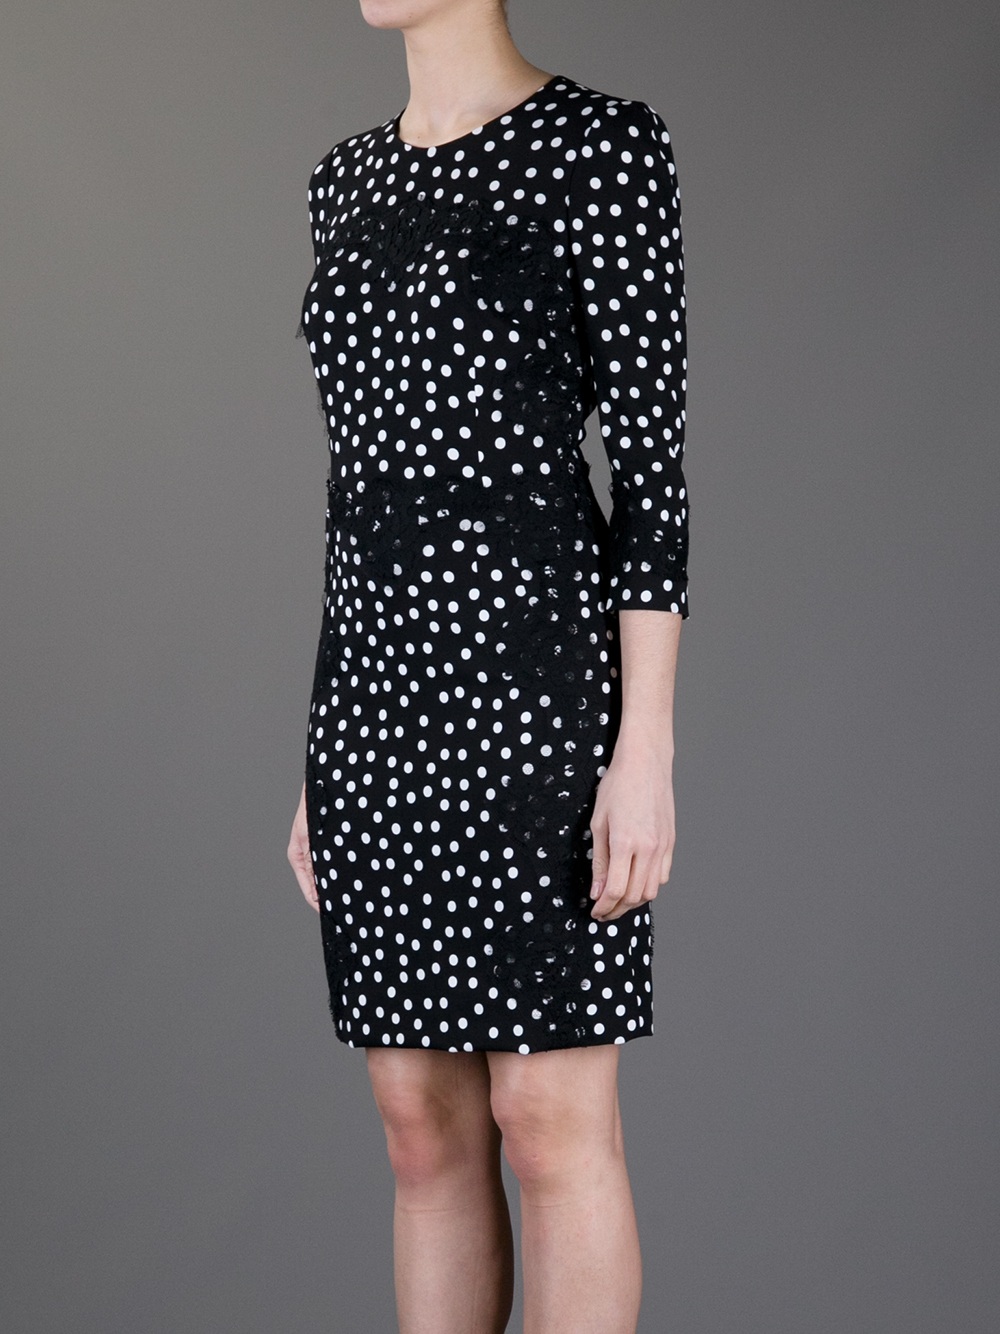 Dolce & Gabbana Lace Panelled Polkadot Dress in Black (White) - Lyst